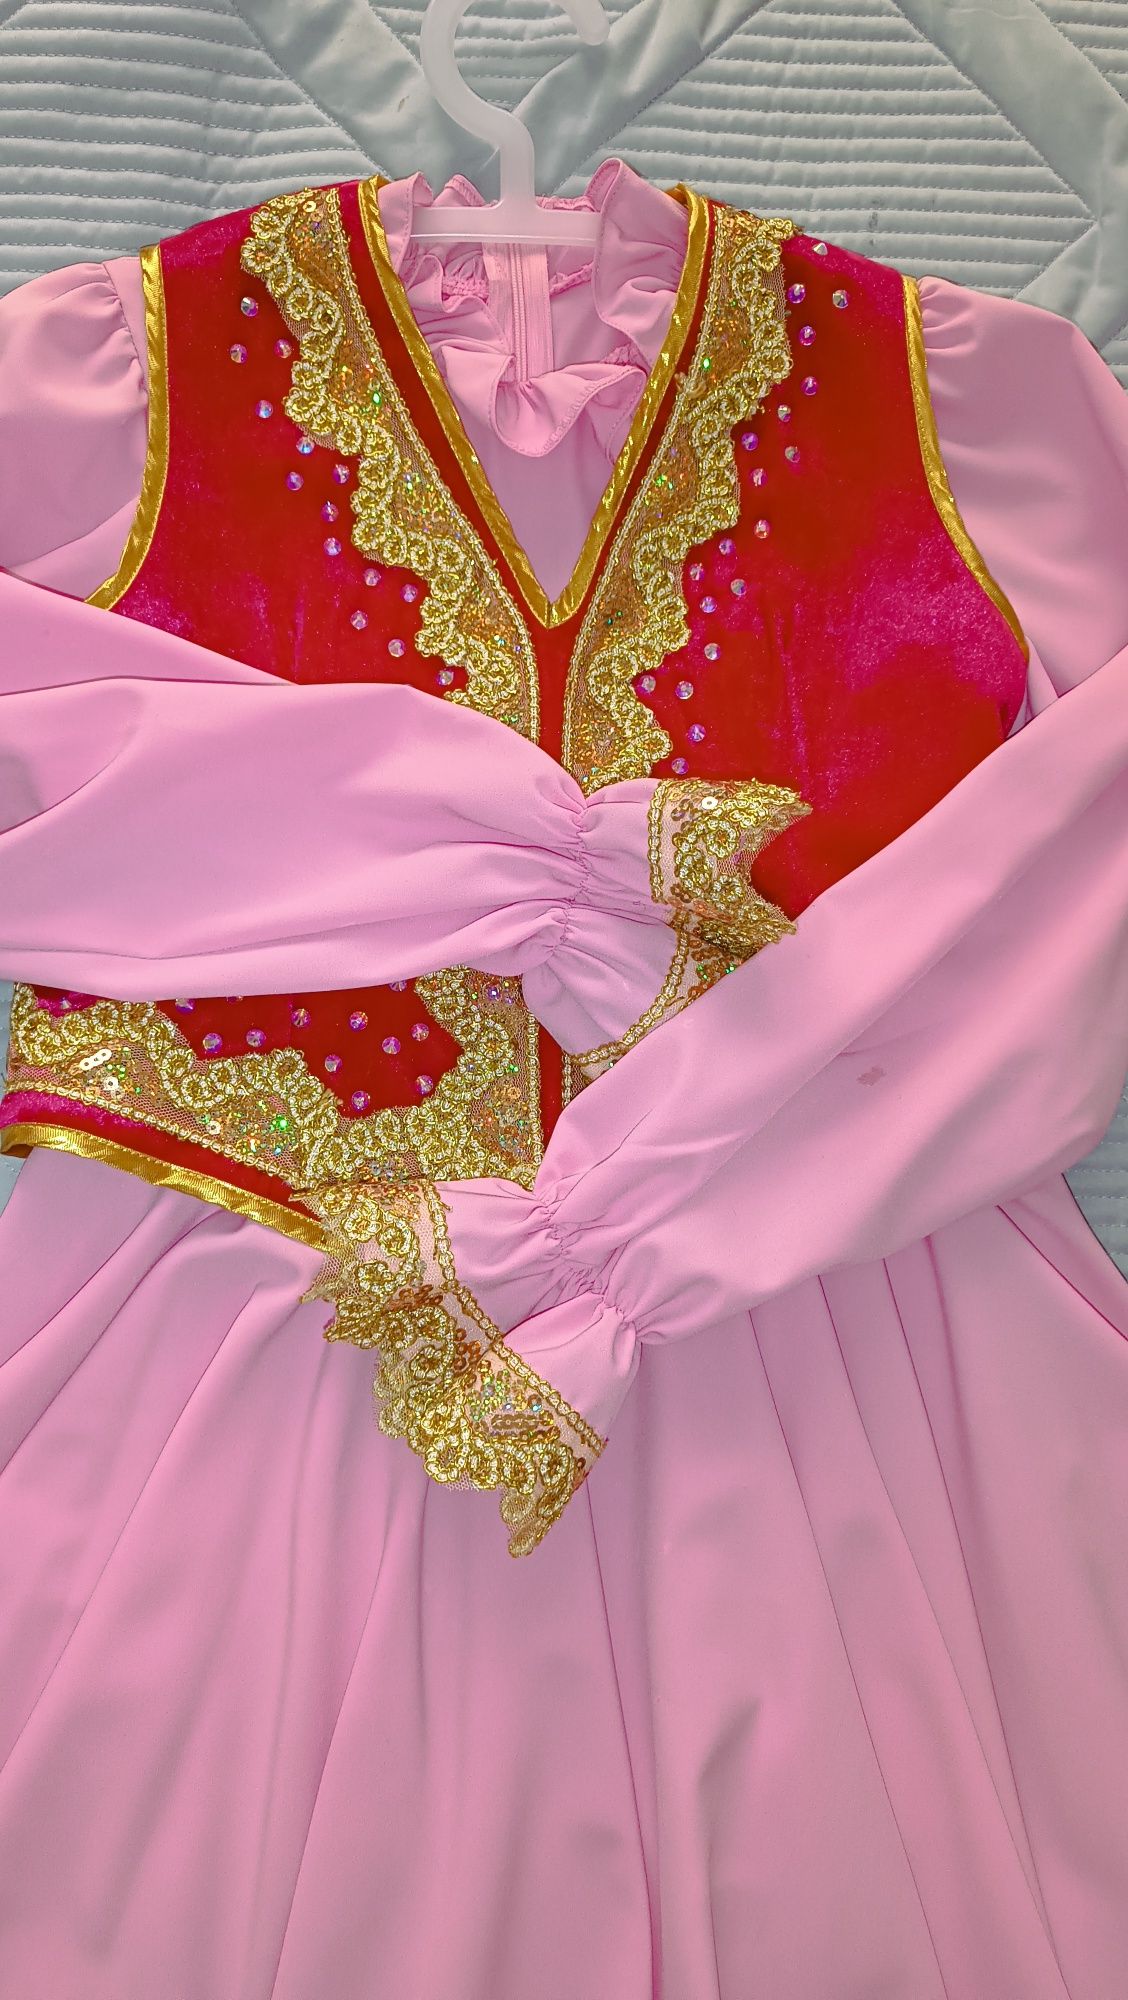 Узбекский костюм